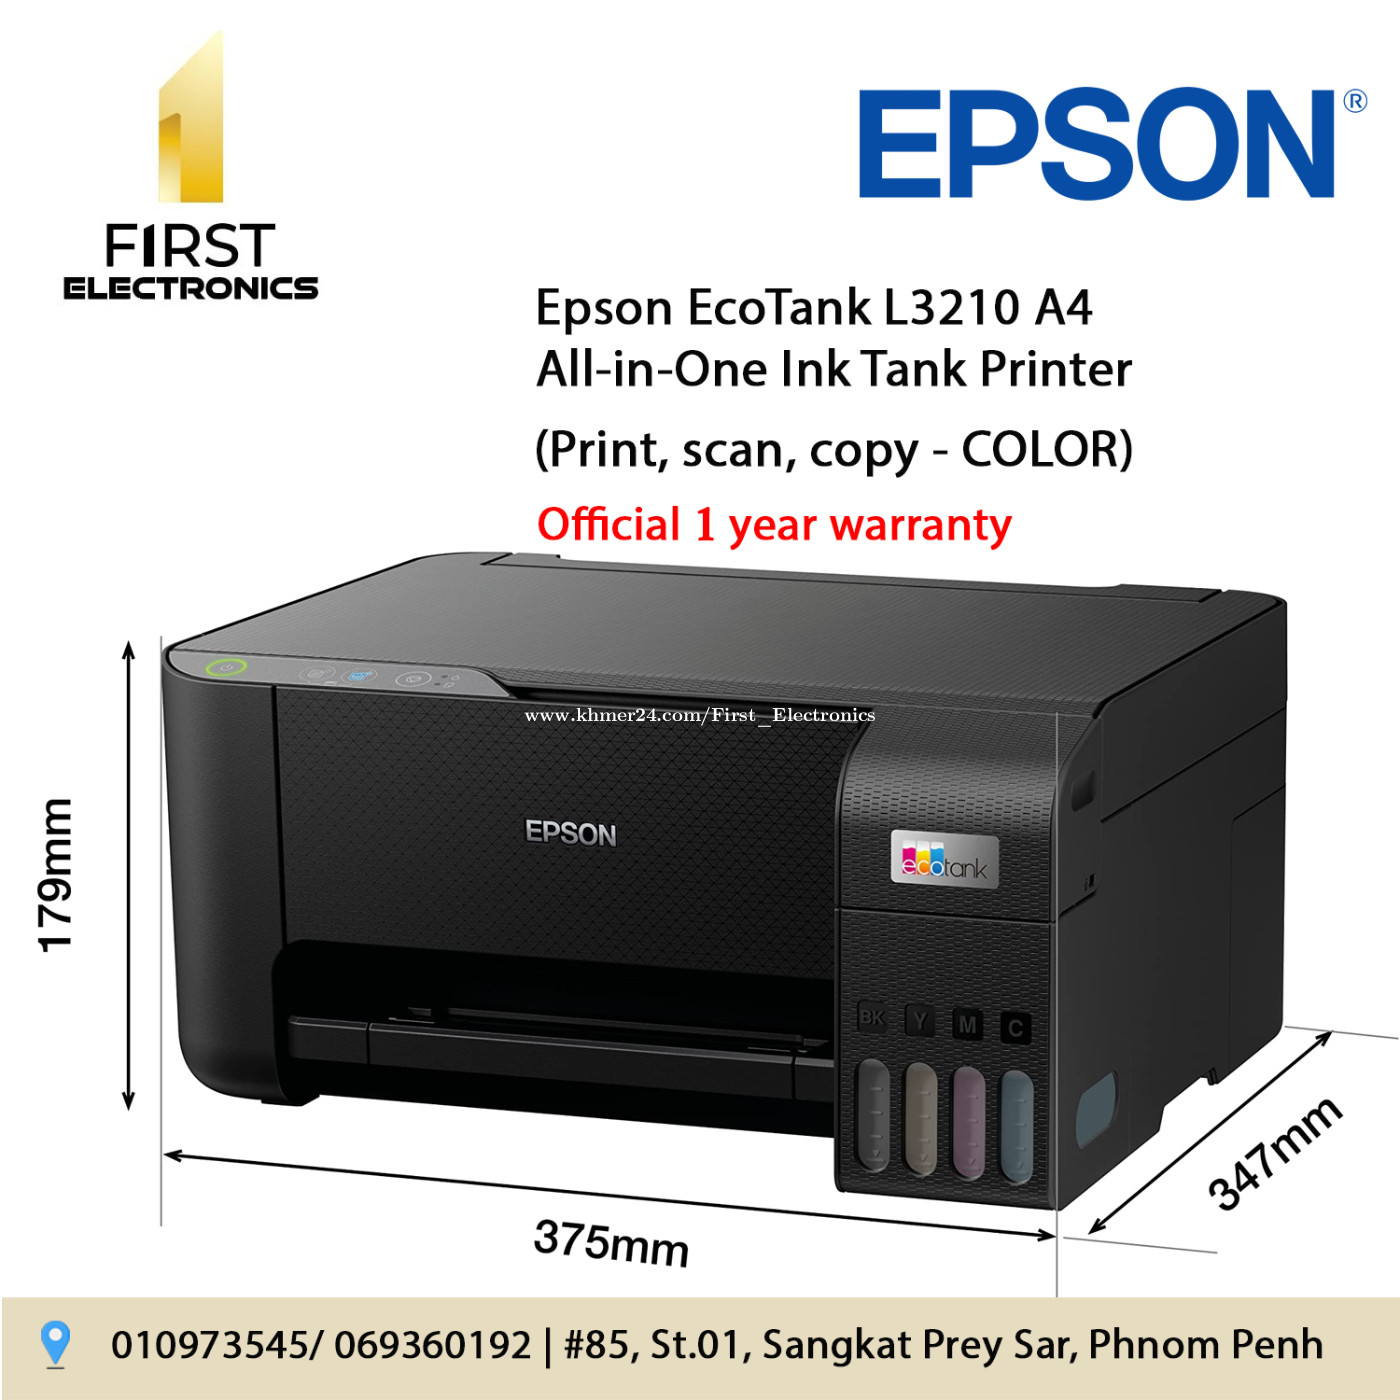 Epson Ecotank L3210 A4 All In One Ink Tank Printer Price 15000 In Phnom Penh Cambodia Blue 0974